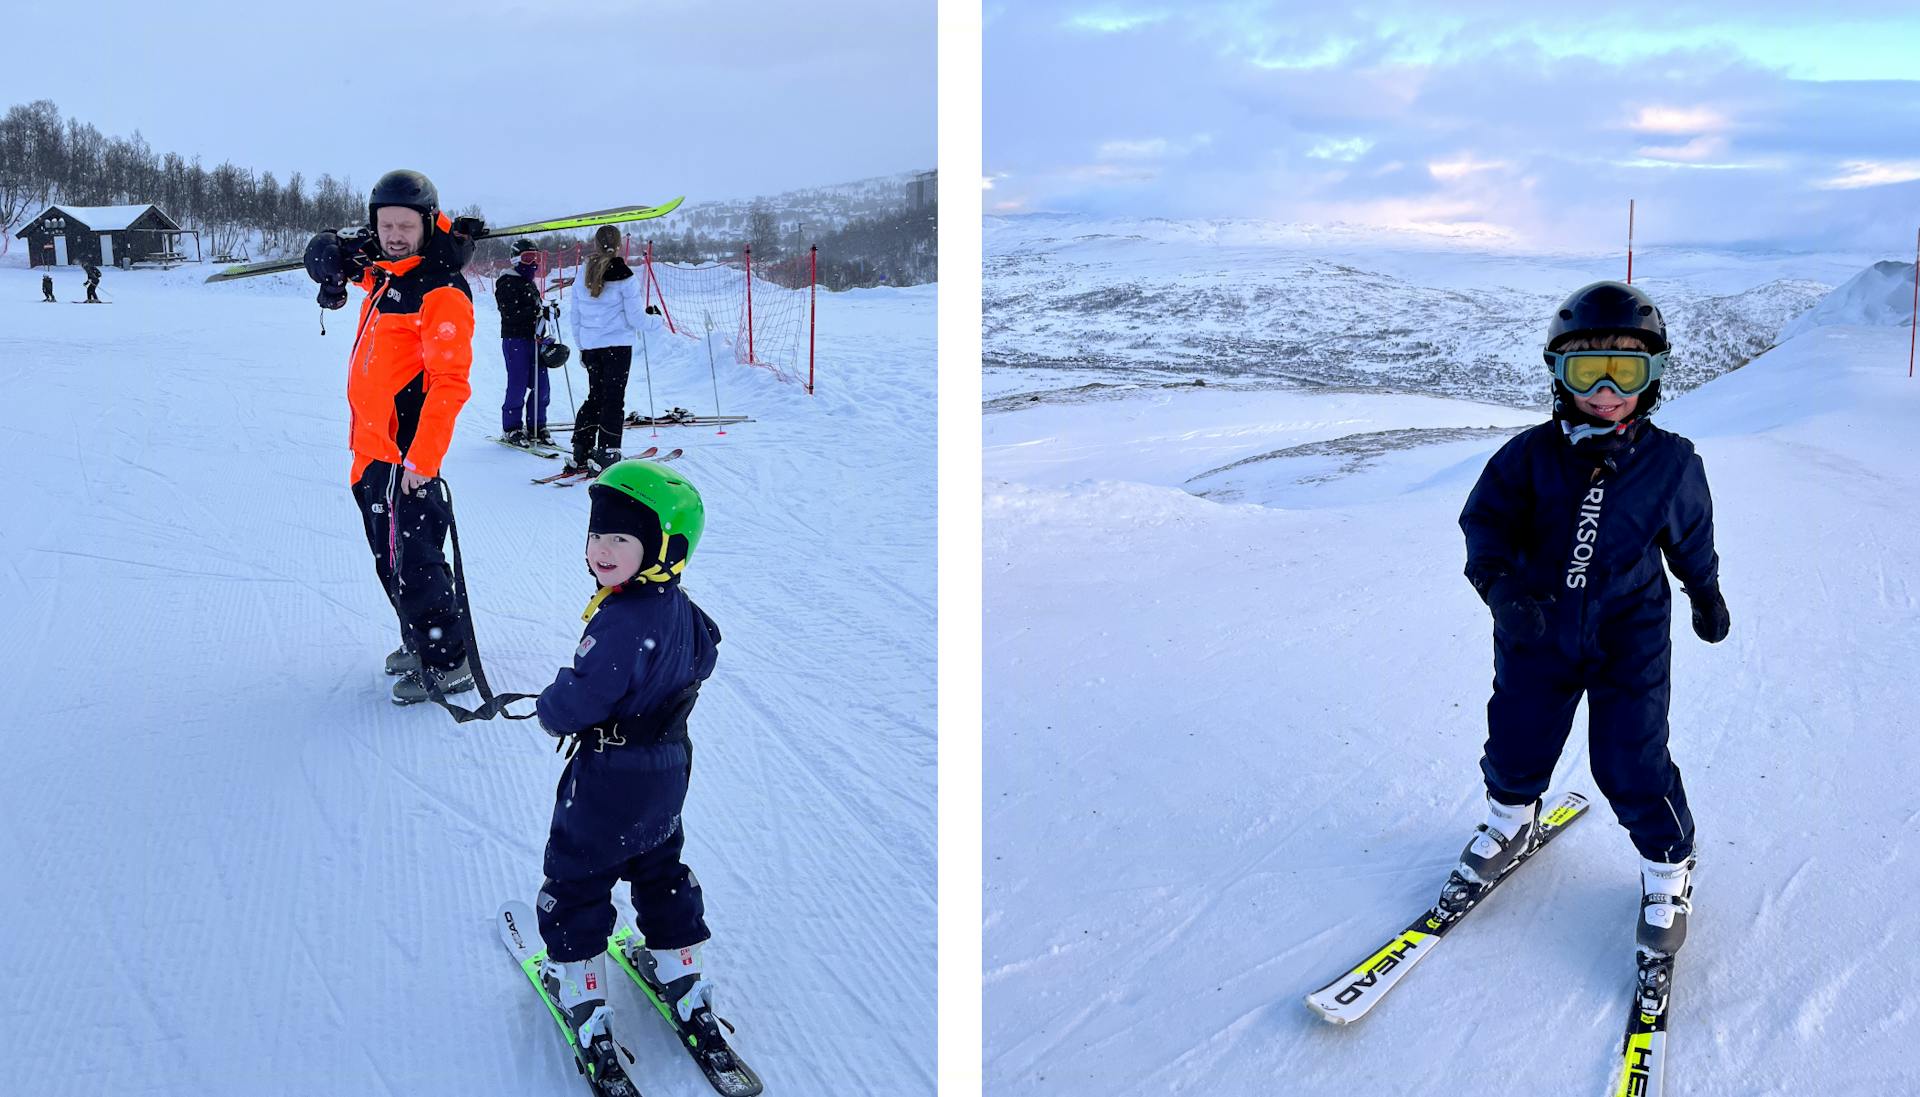 Barnen på skidor